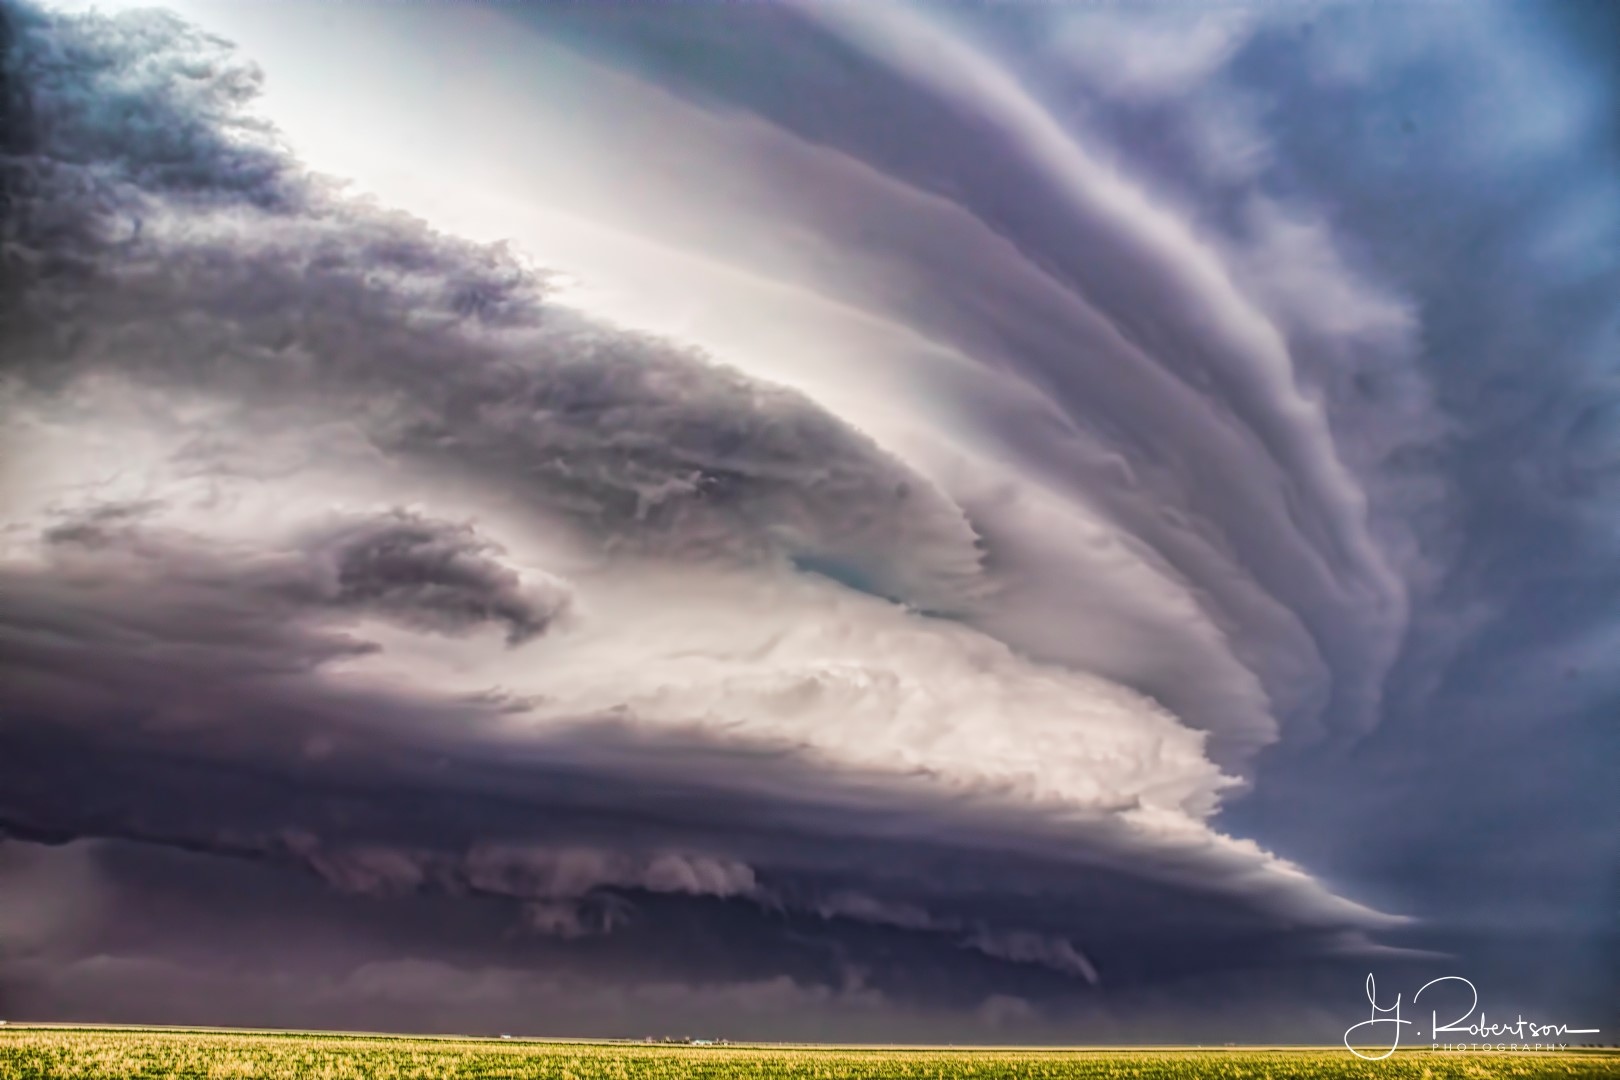 A severe thunderstorm moves across a canola field in Kiowa County Colorado